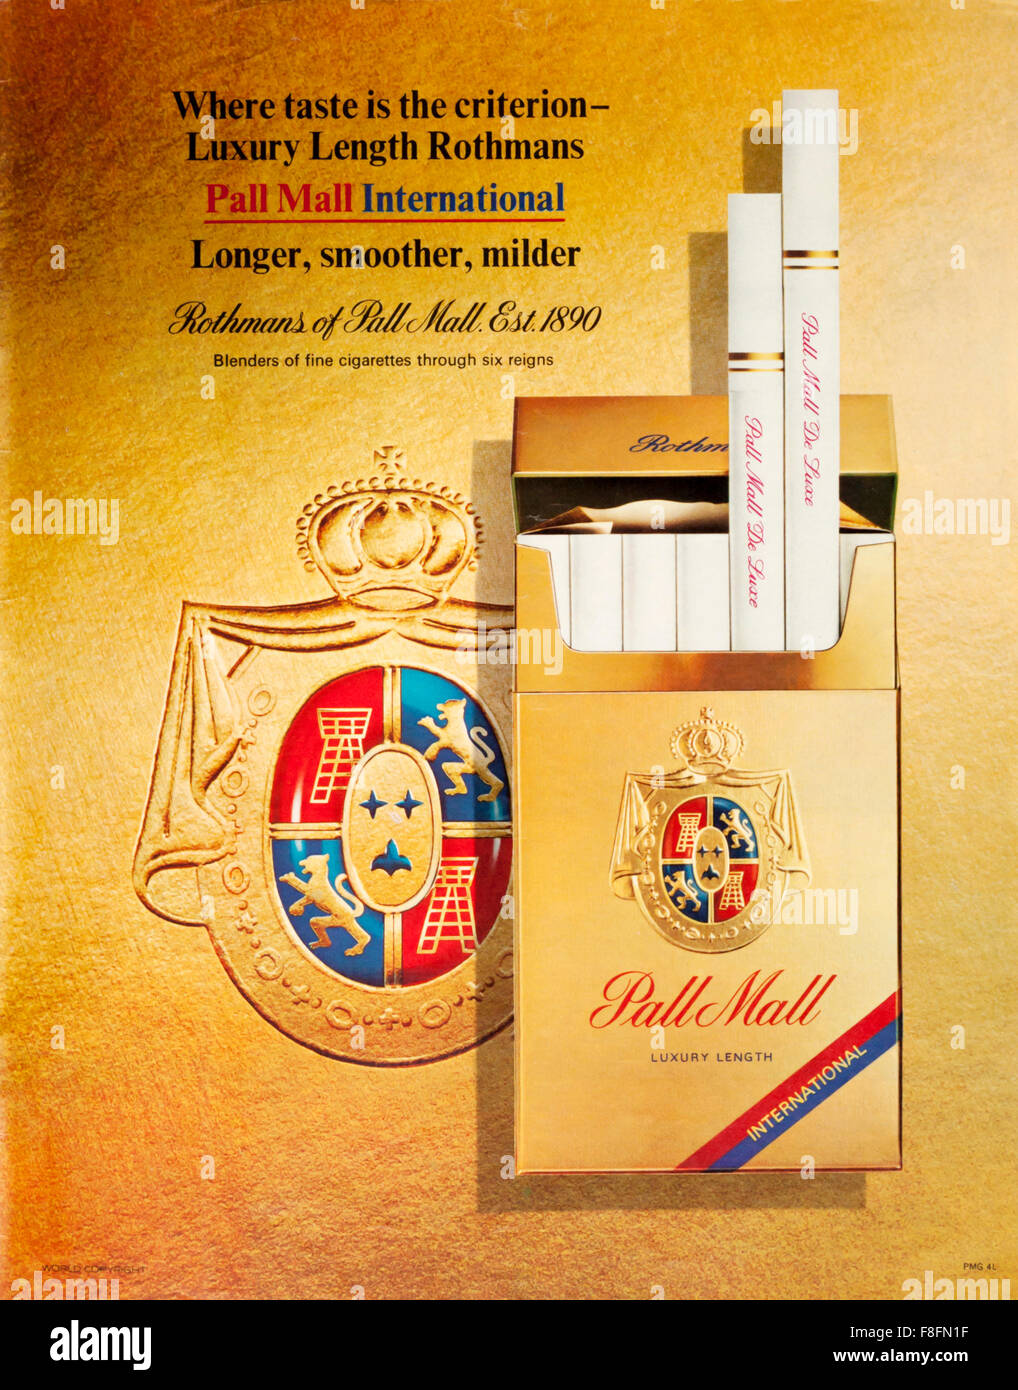 1970s magazine advertisement advertising Rothmans Pall Mall International cigarettes. Stock Photo